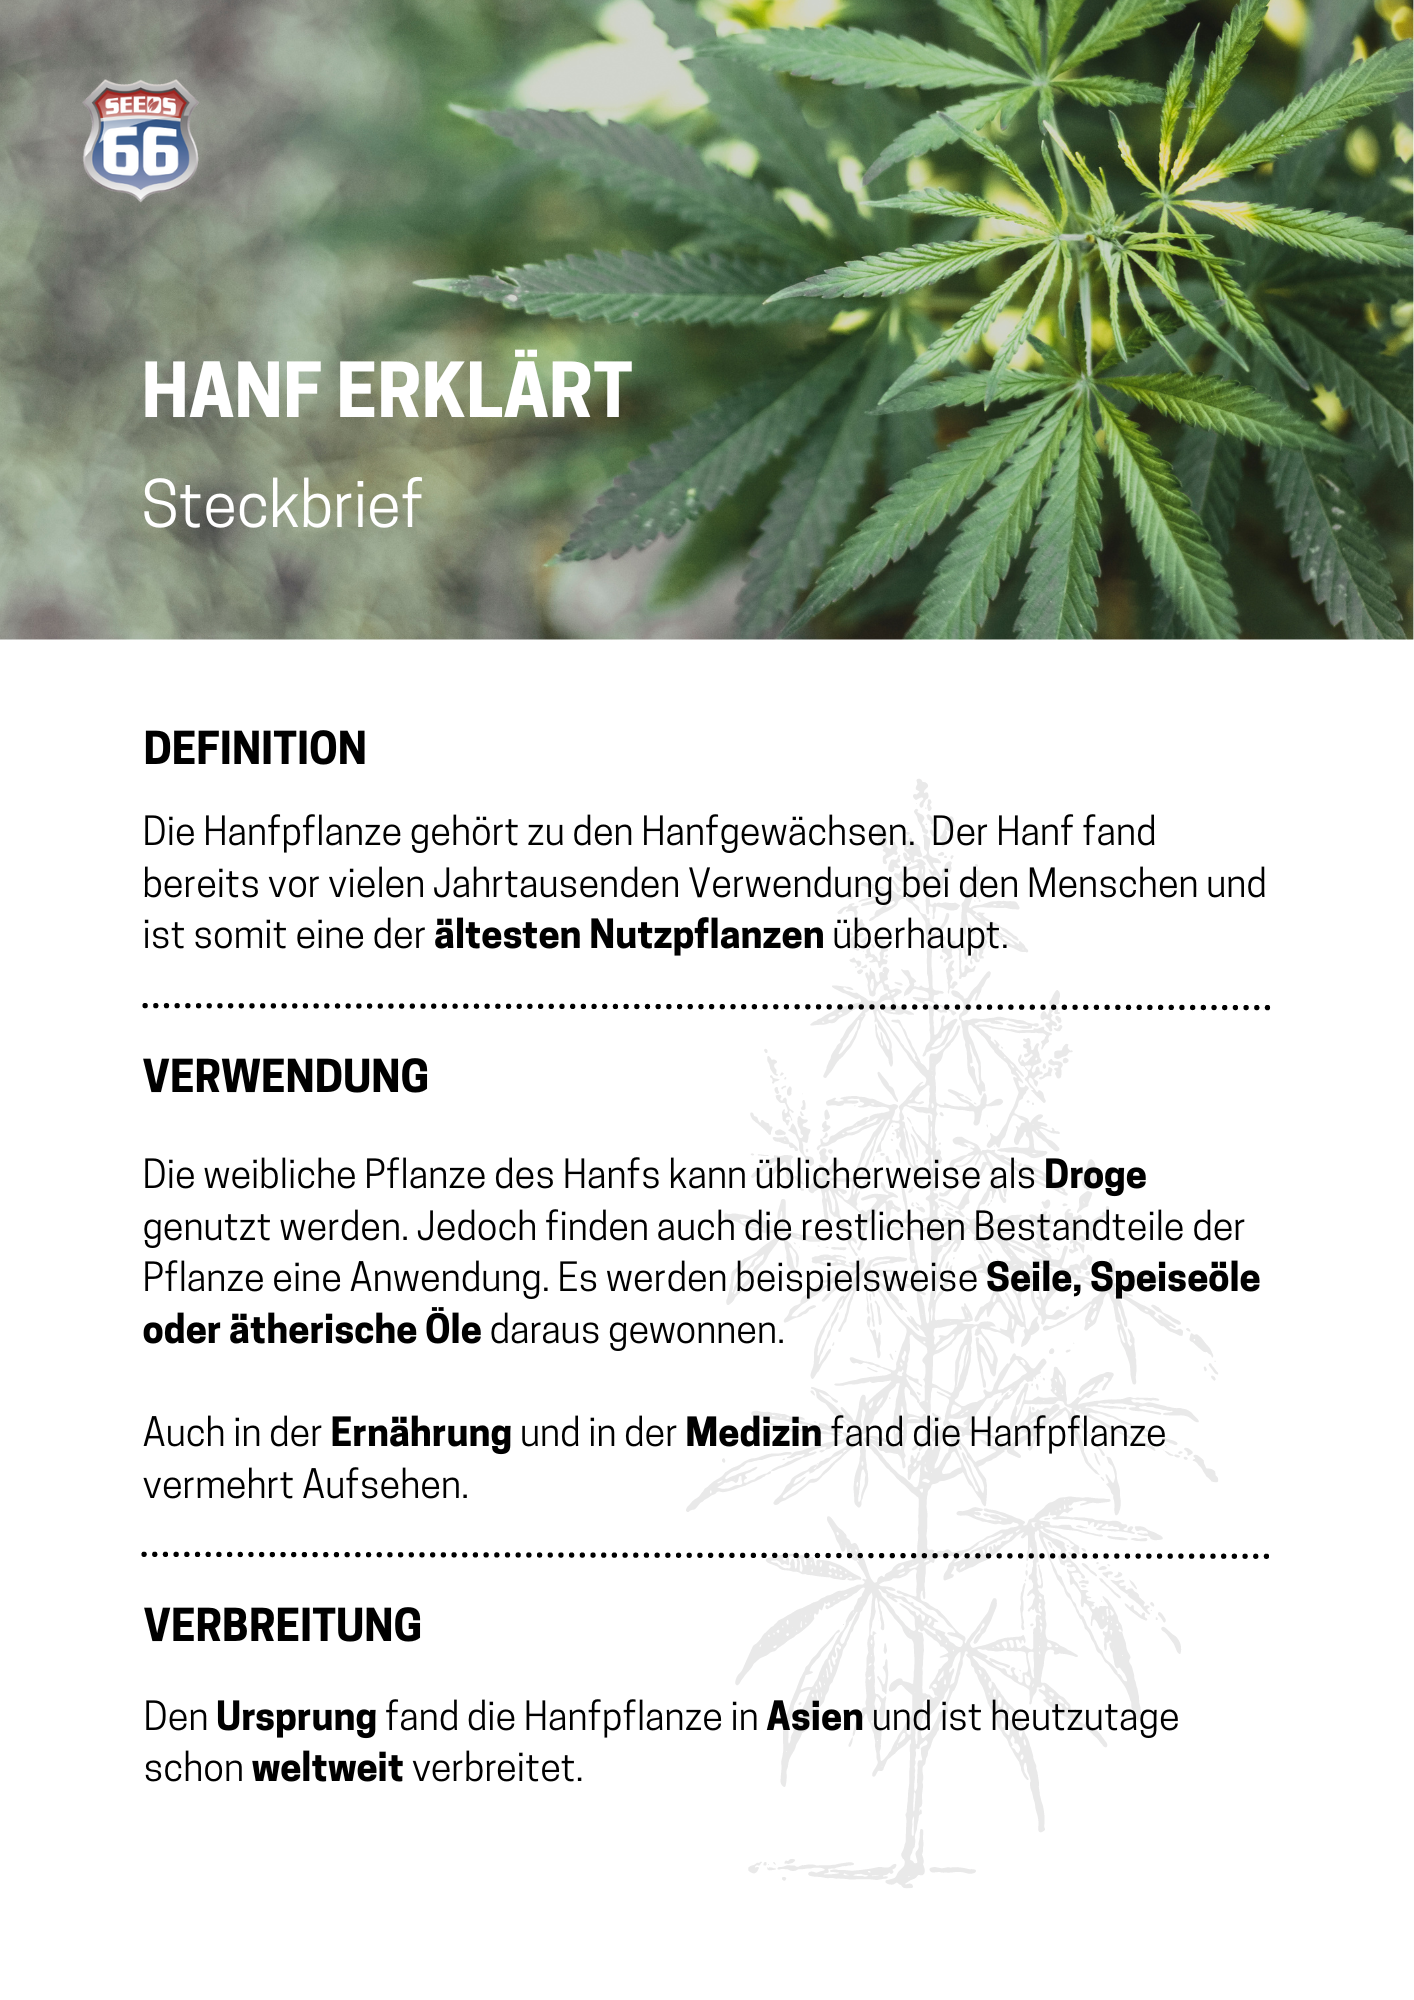 infografik_erklaerung_hanf